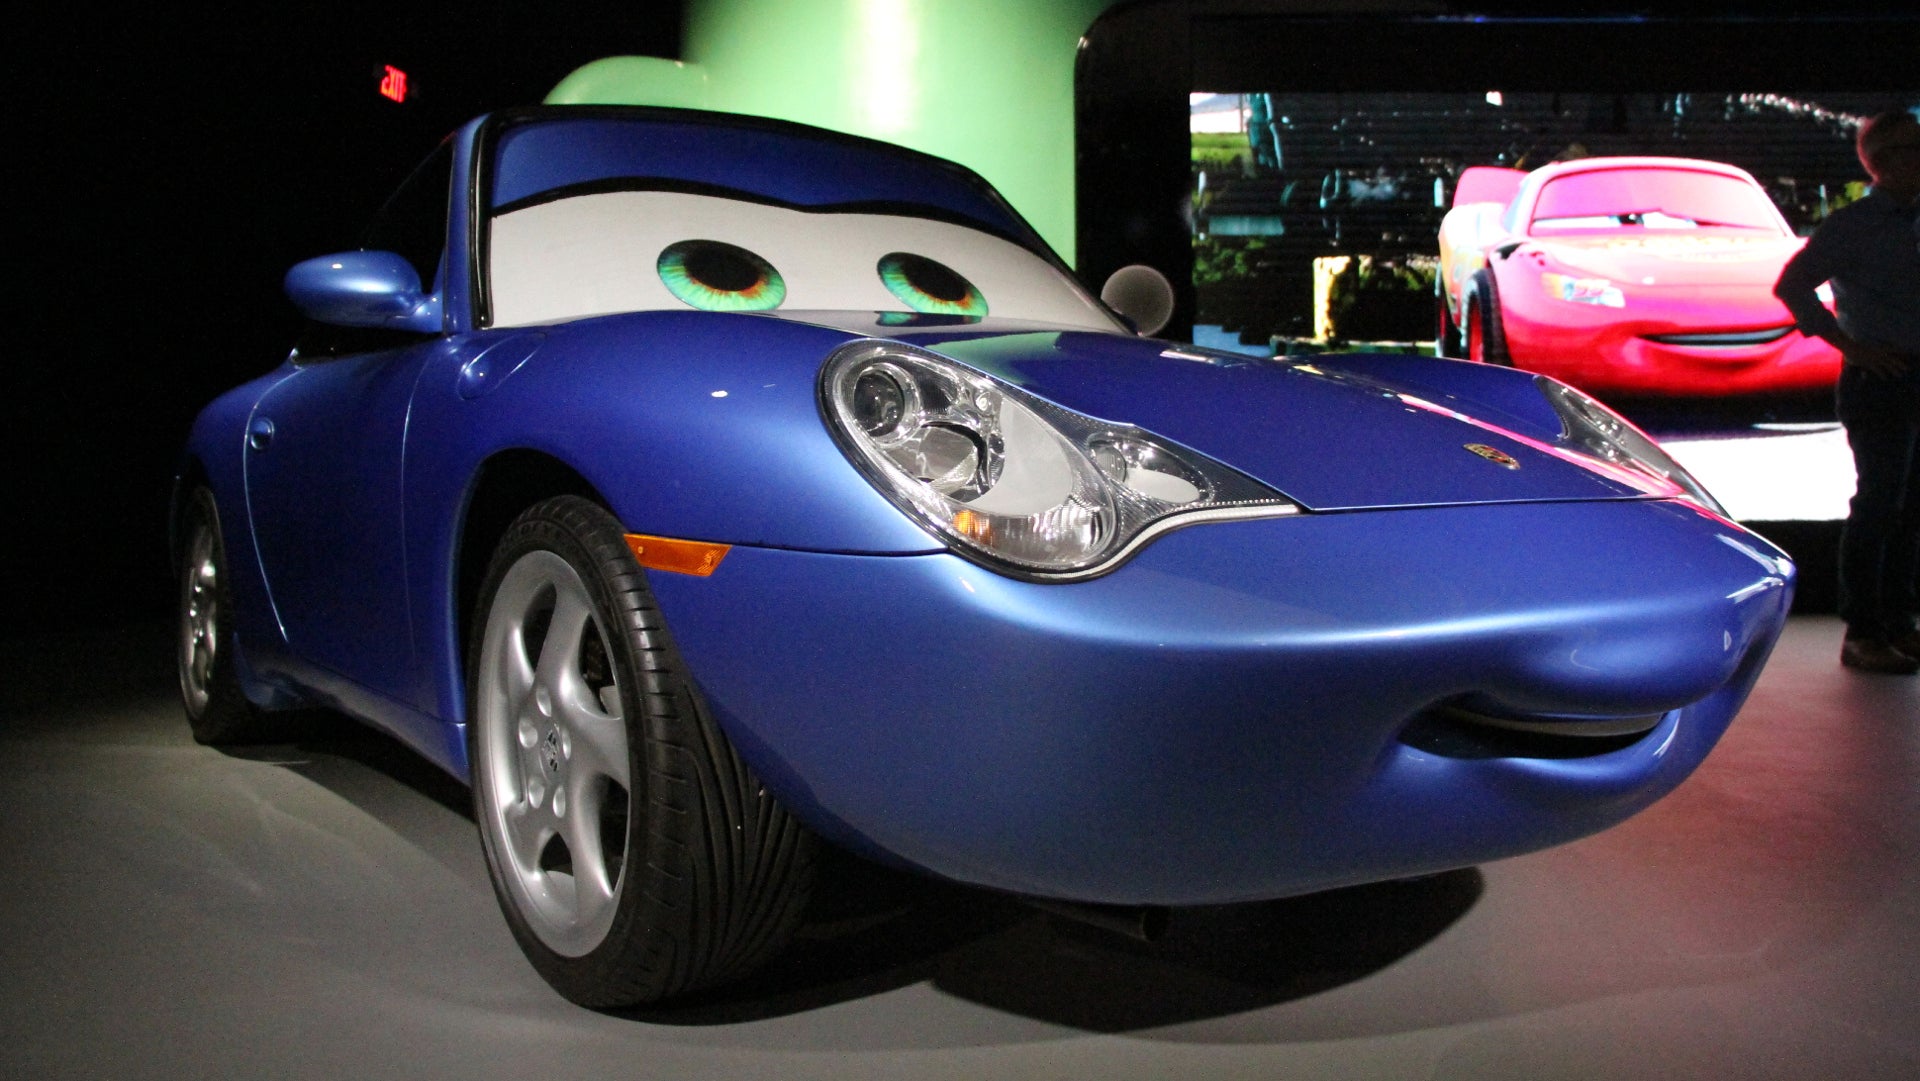 Disney Pixar Cars Radiator Springs Sally Modellauto Auto blau Porsche 911 